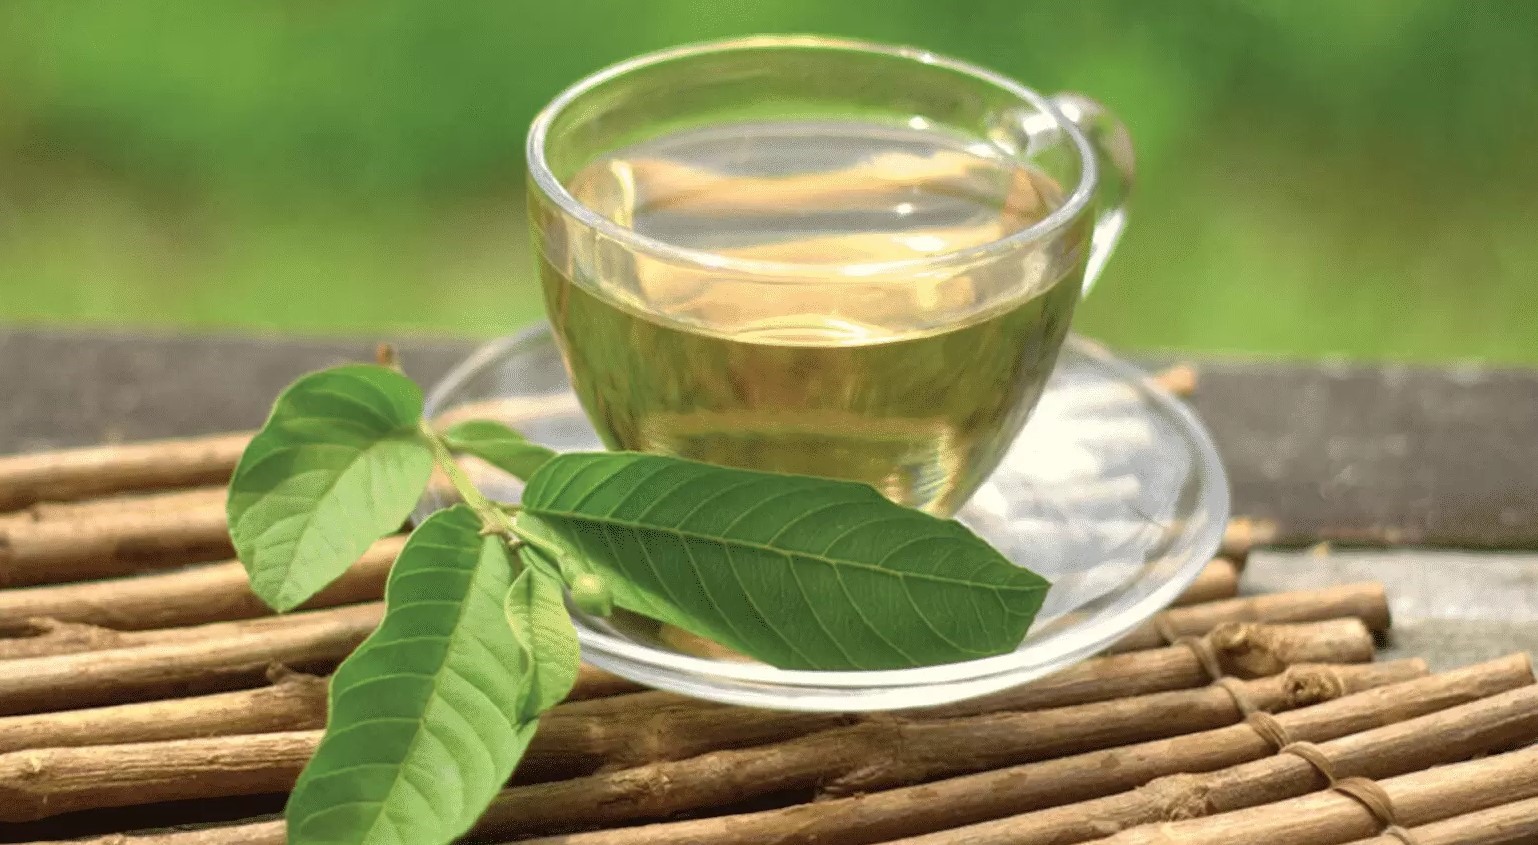 Uống trà ổi giảm cân hiệu quả, tốt cho sức khỏe.